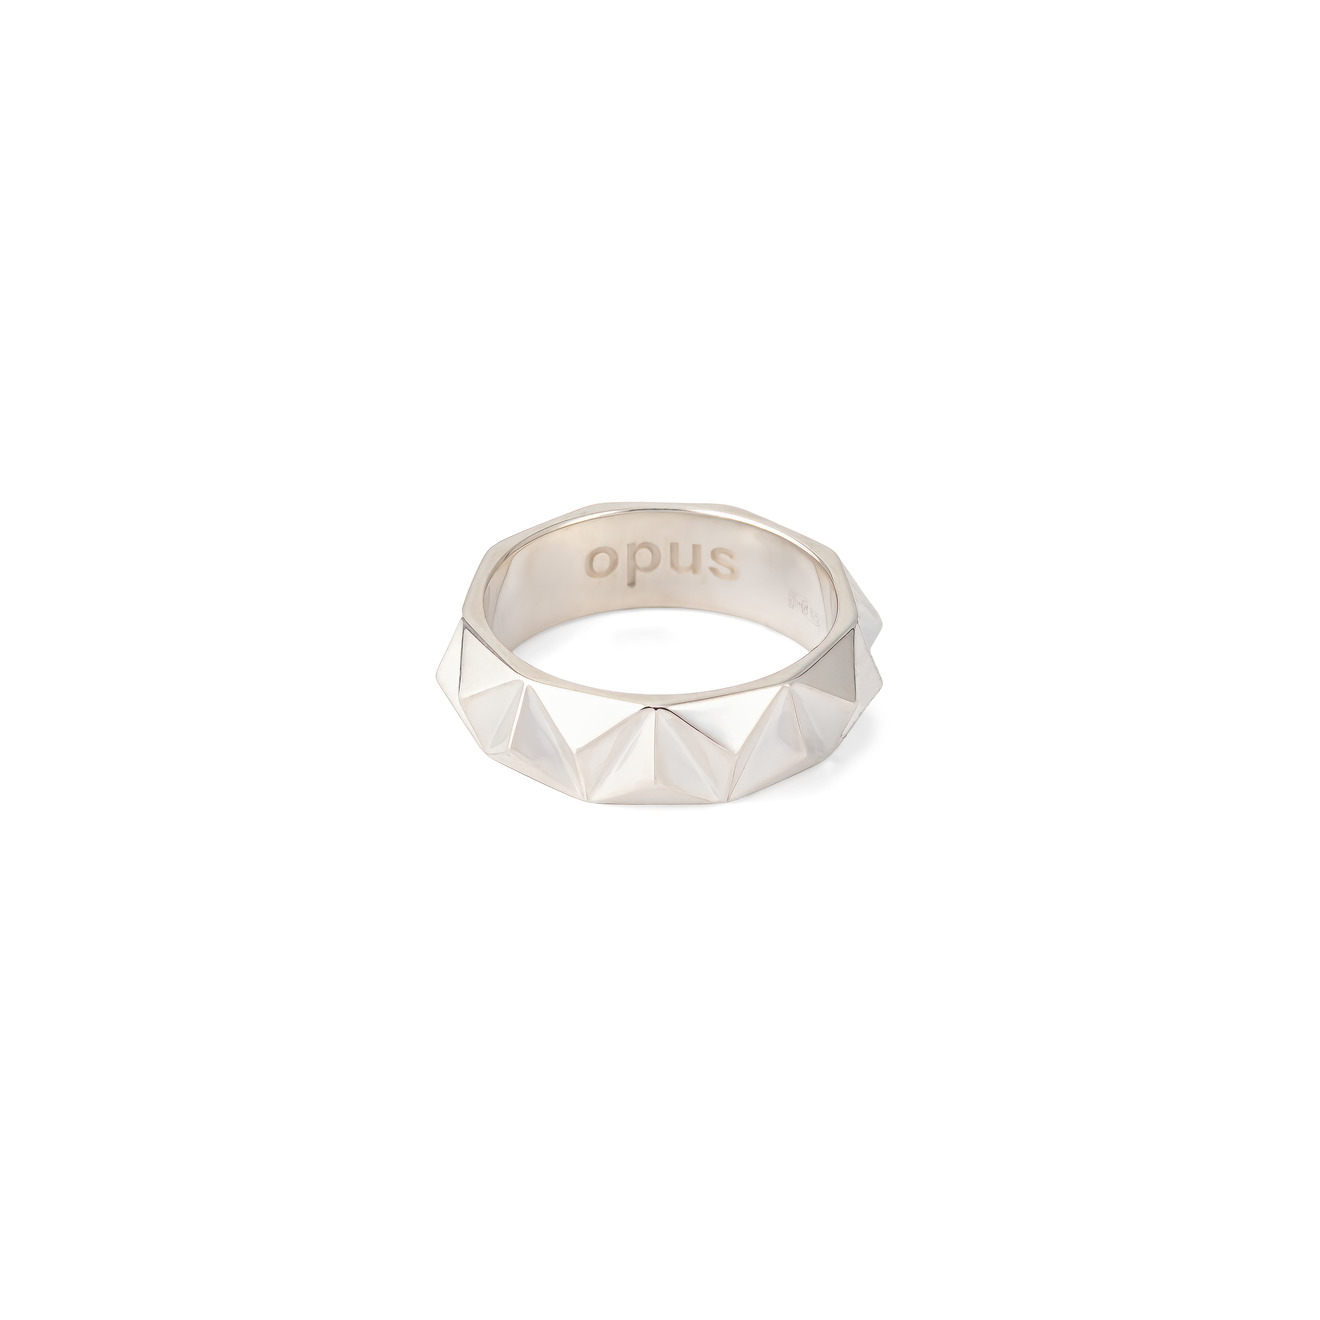 Opus Jewelry Кольцо из серебра с гранями Razor Band Ring 6.5 мм opus jewelry моносерьга из серебра net cross earring с хризолитом